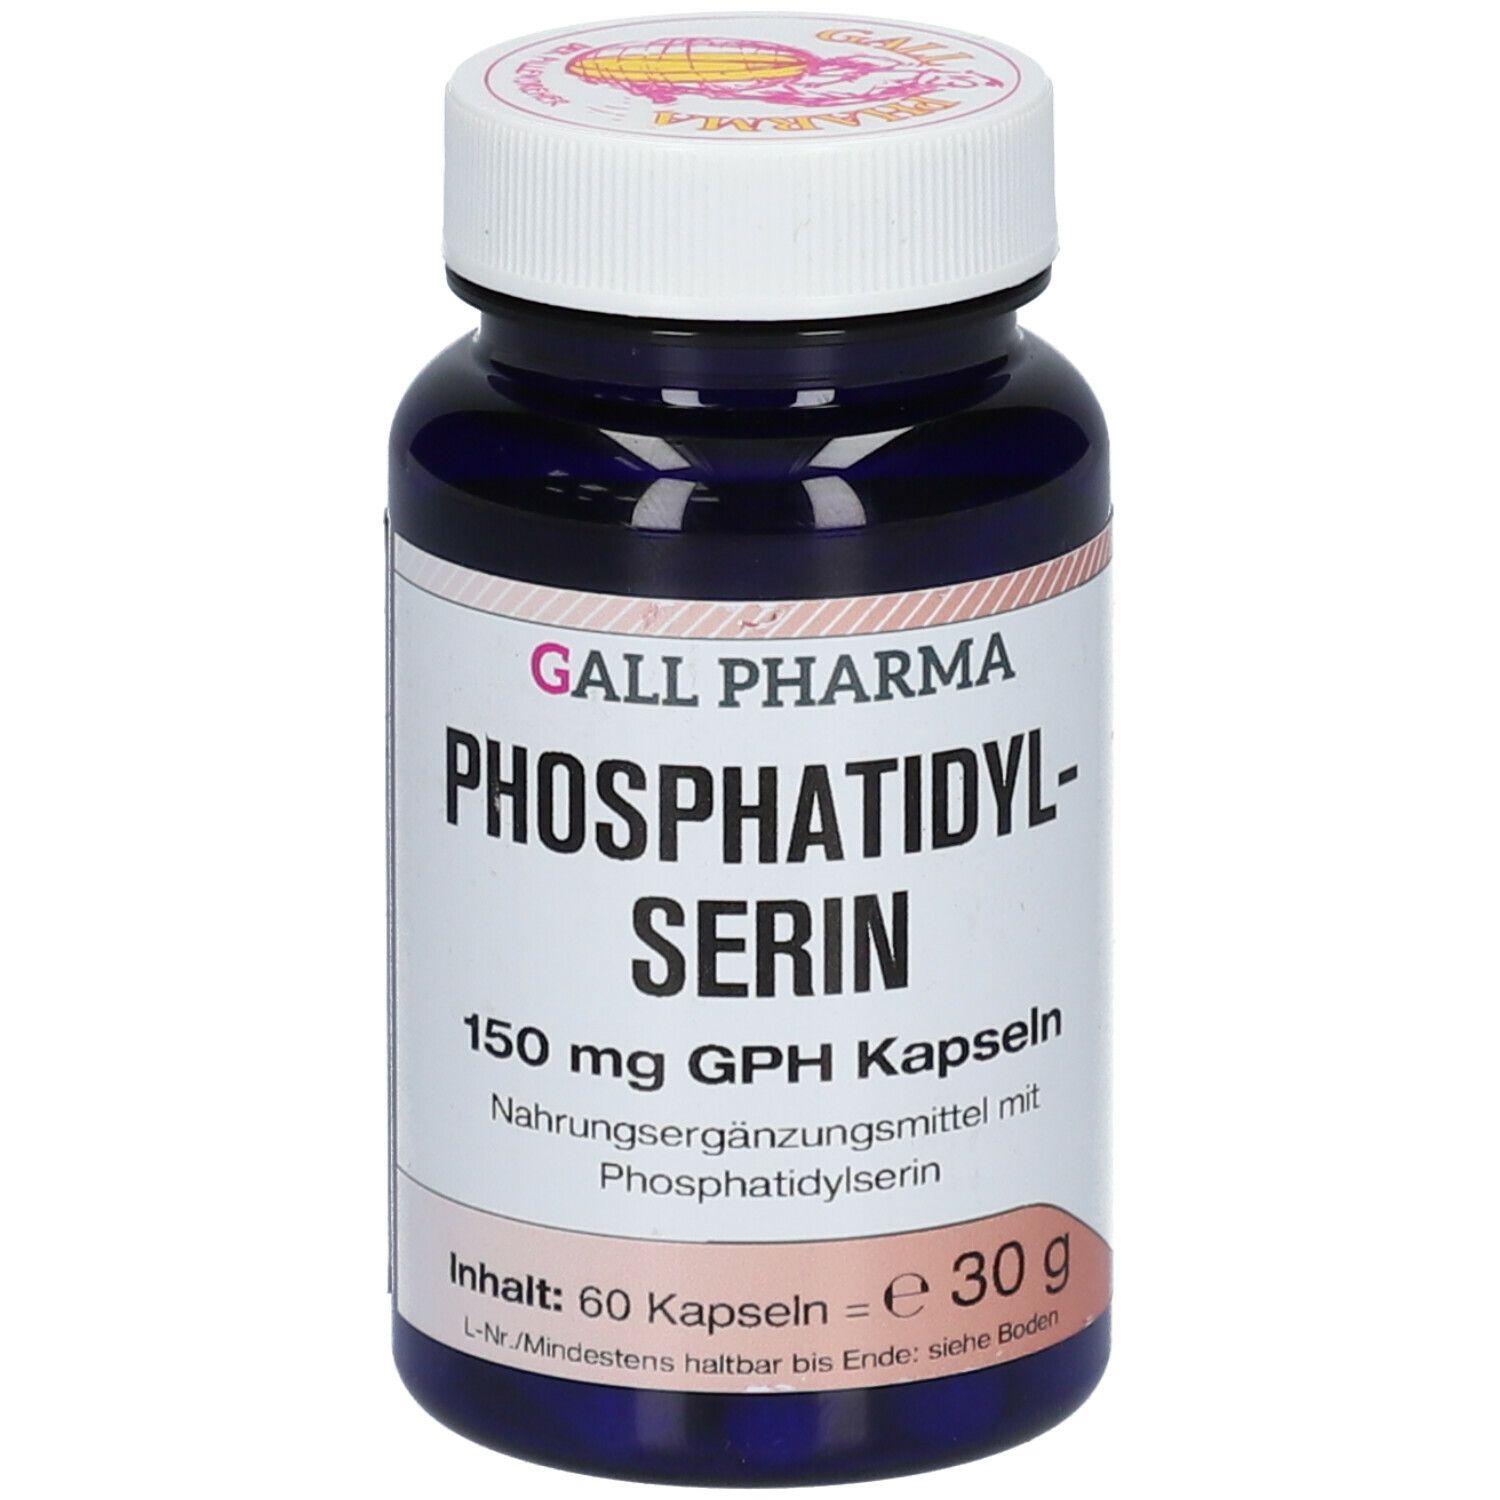 Image of GALL PHARMA Phosphatidyl-Serin 150 mg GPH Kapseln